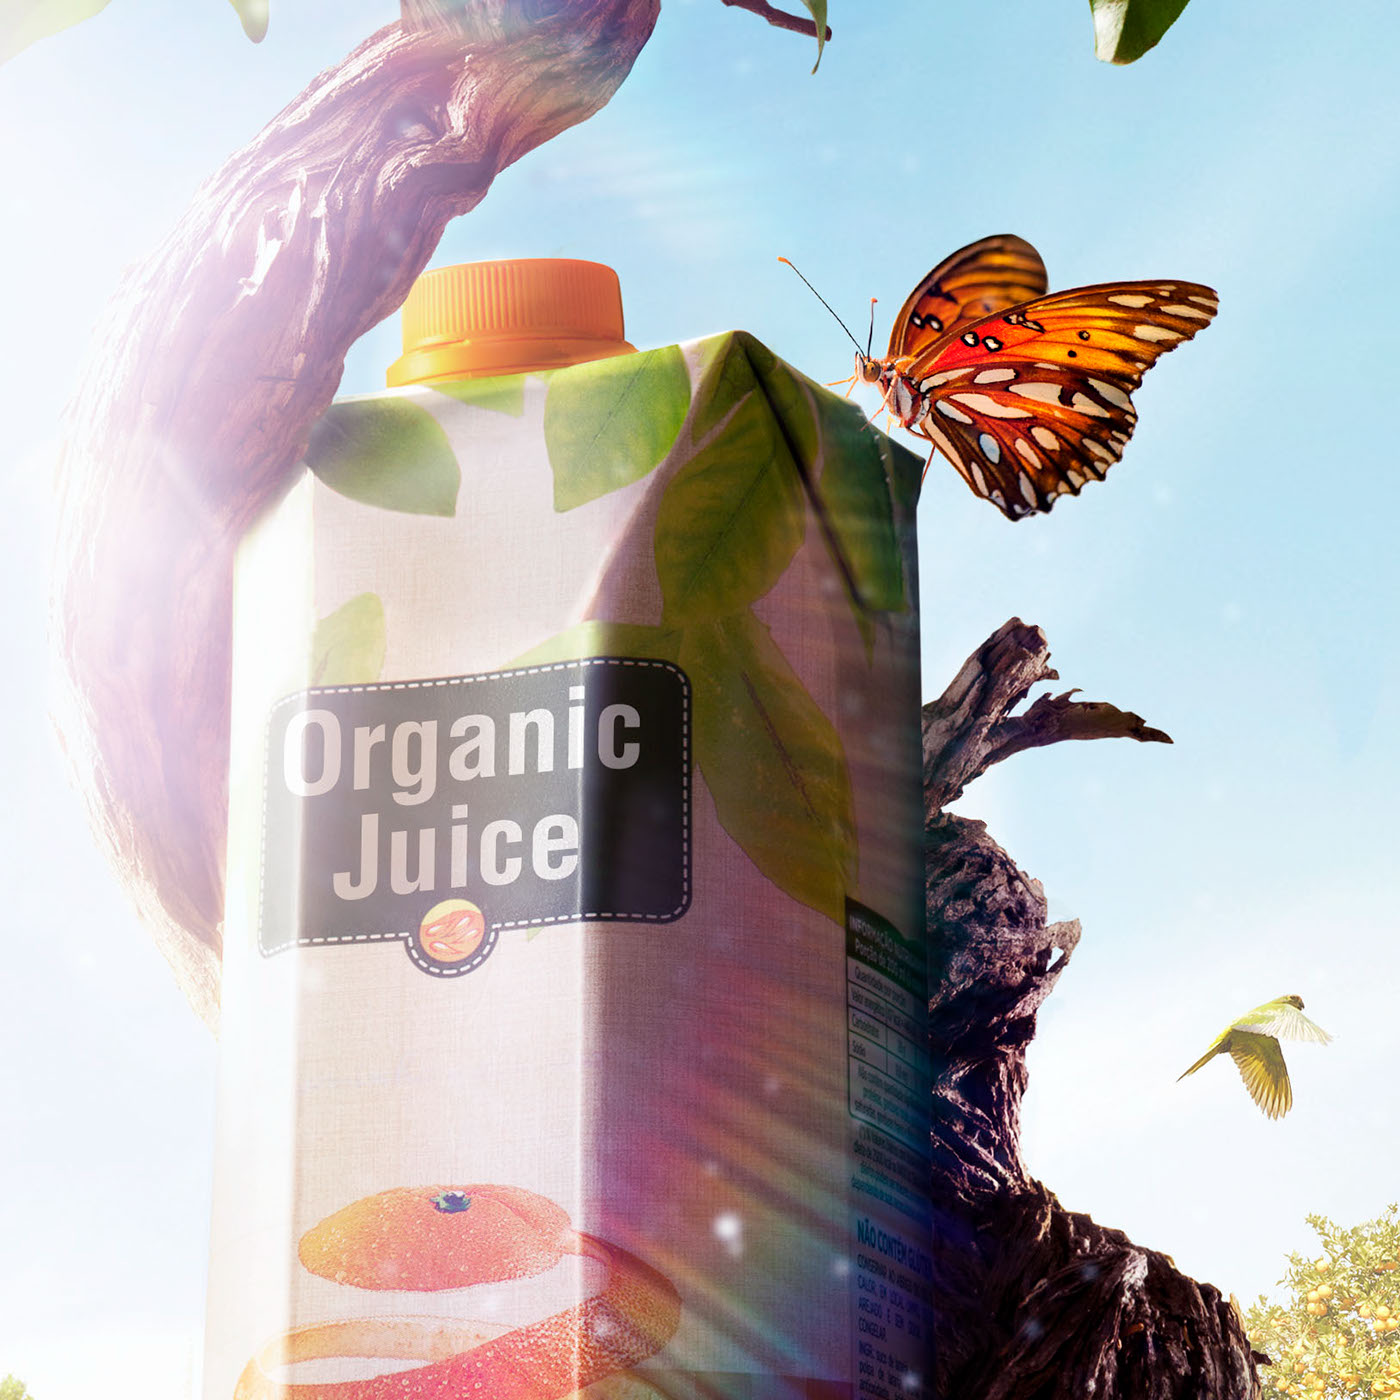 oranges natural juice product